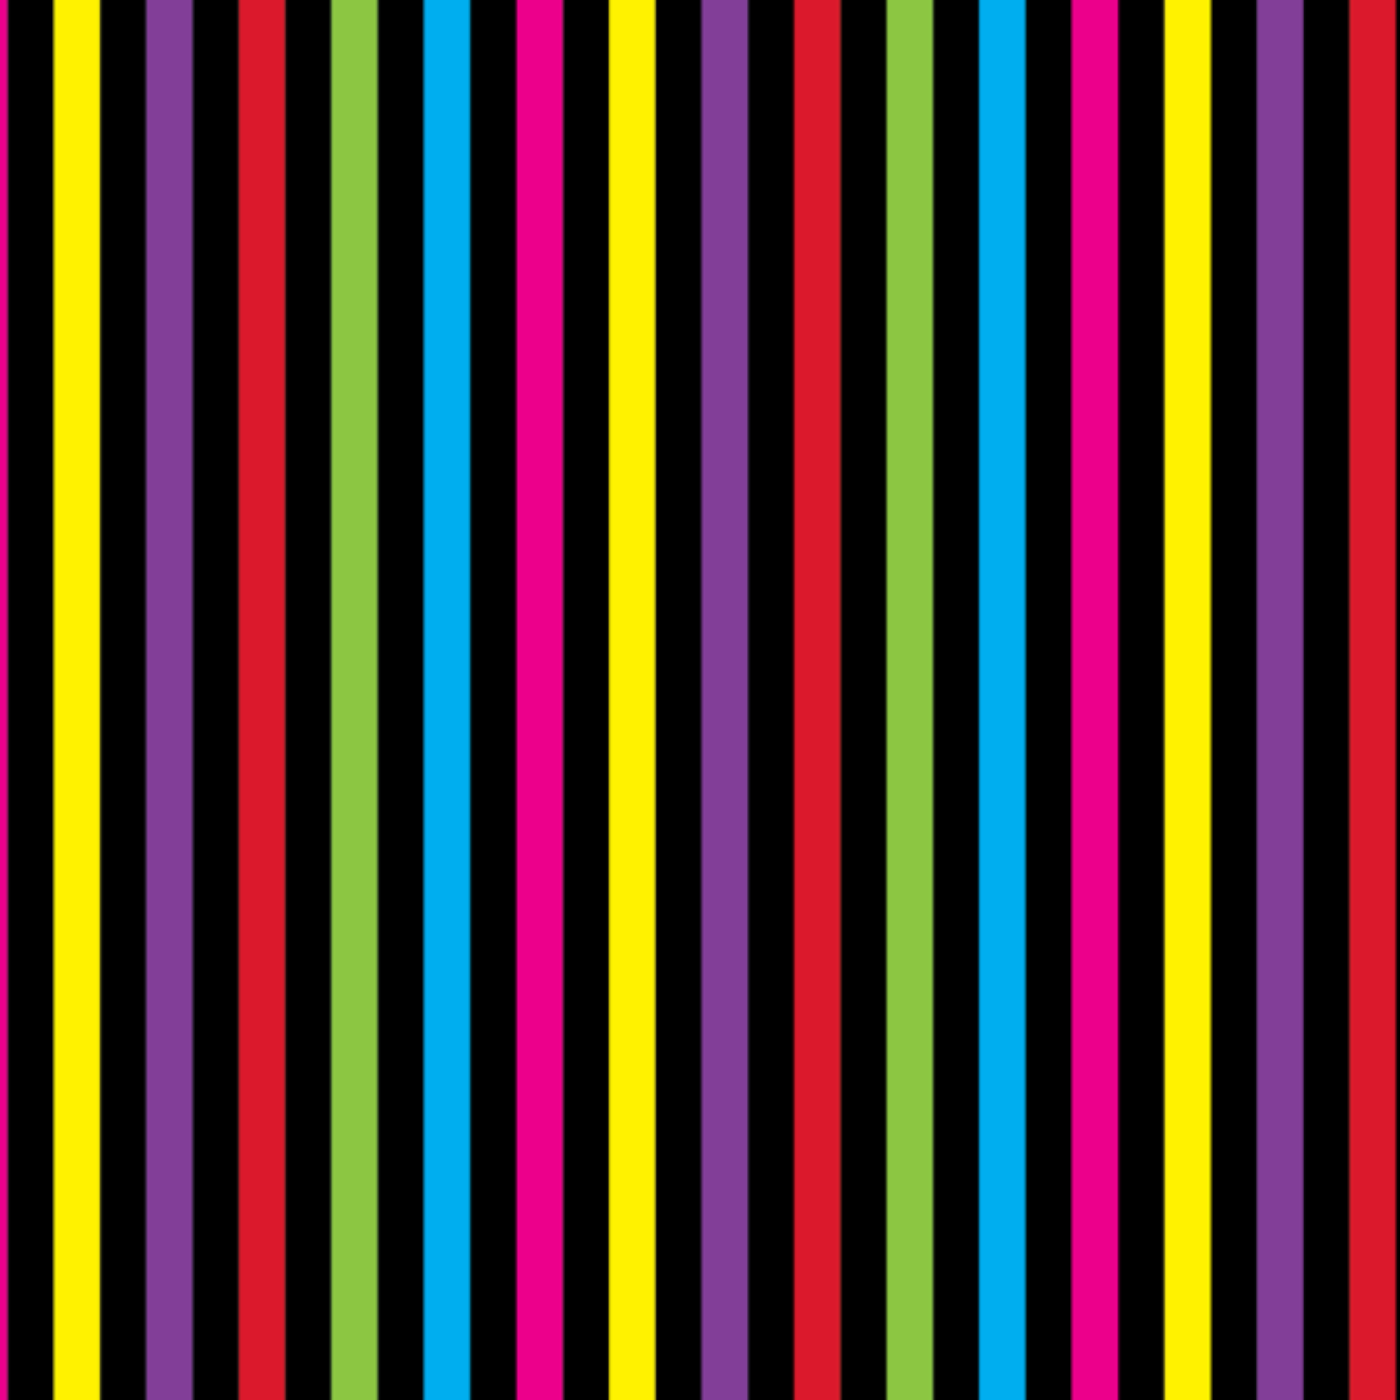 Confetti-Rainbow-Colours-Polka-Dots-Stripes-Vibrant-Vintage-Inspired-RainbowsAndFairies.com-CONFT_ORG-Pic_02